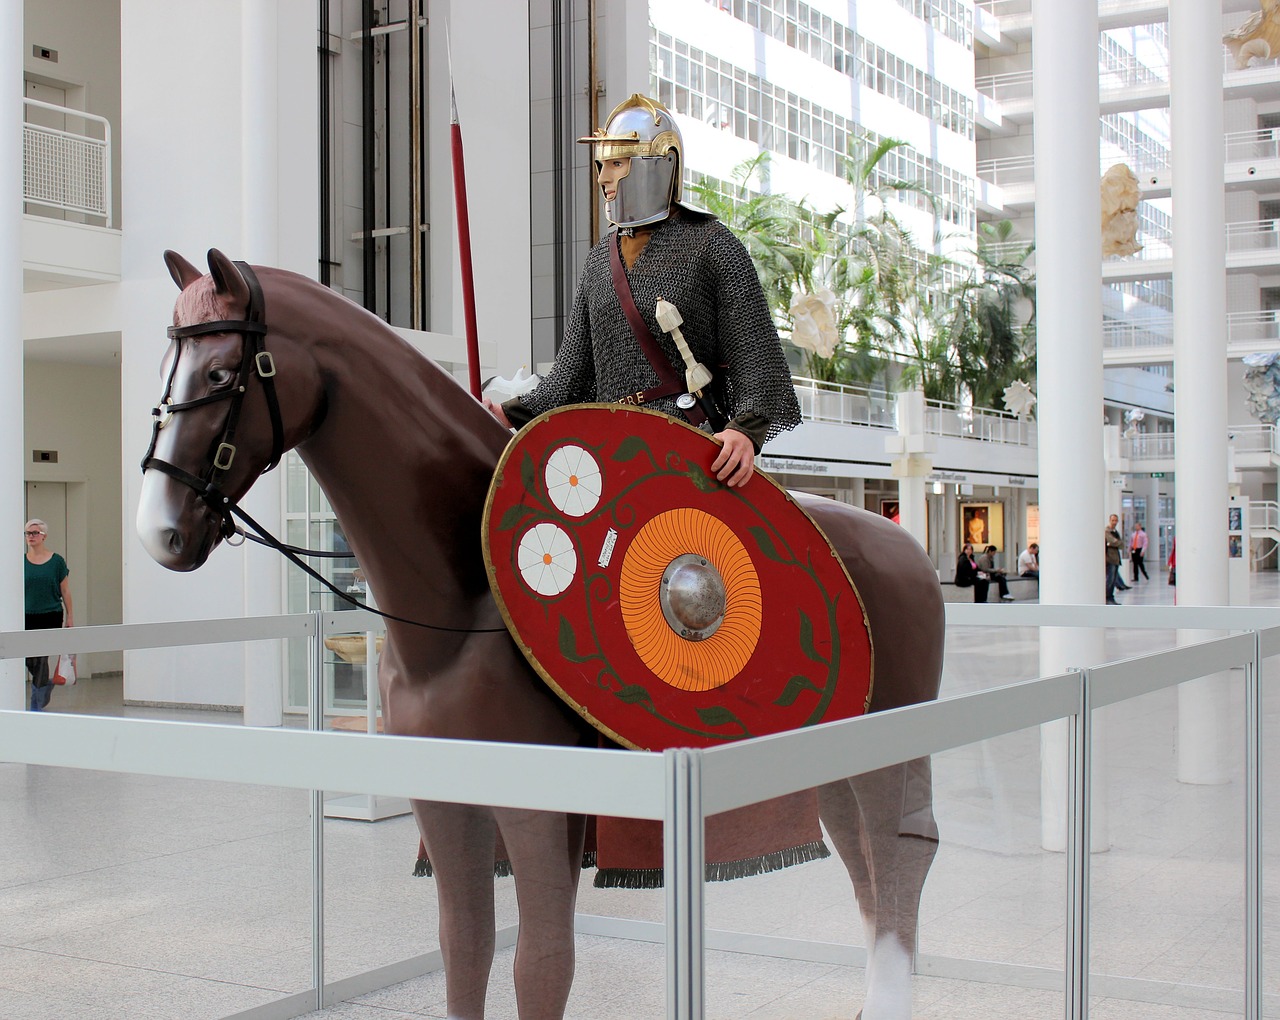 sculpture horse knight free photo